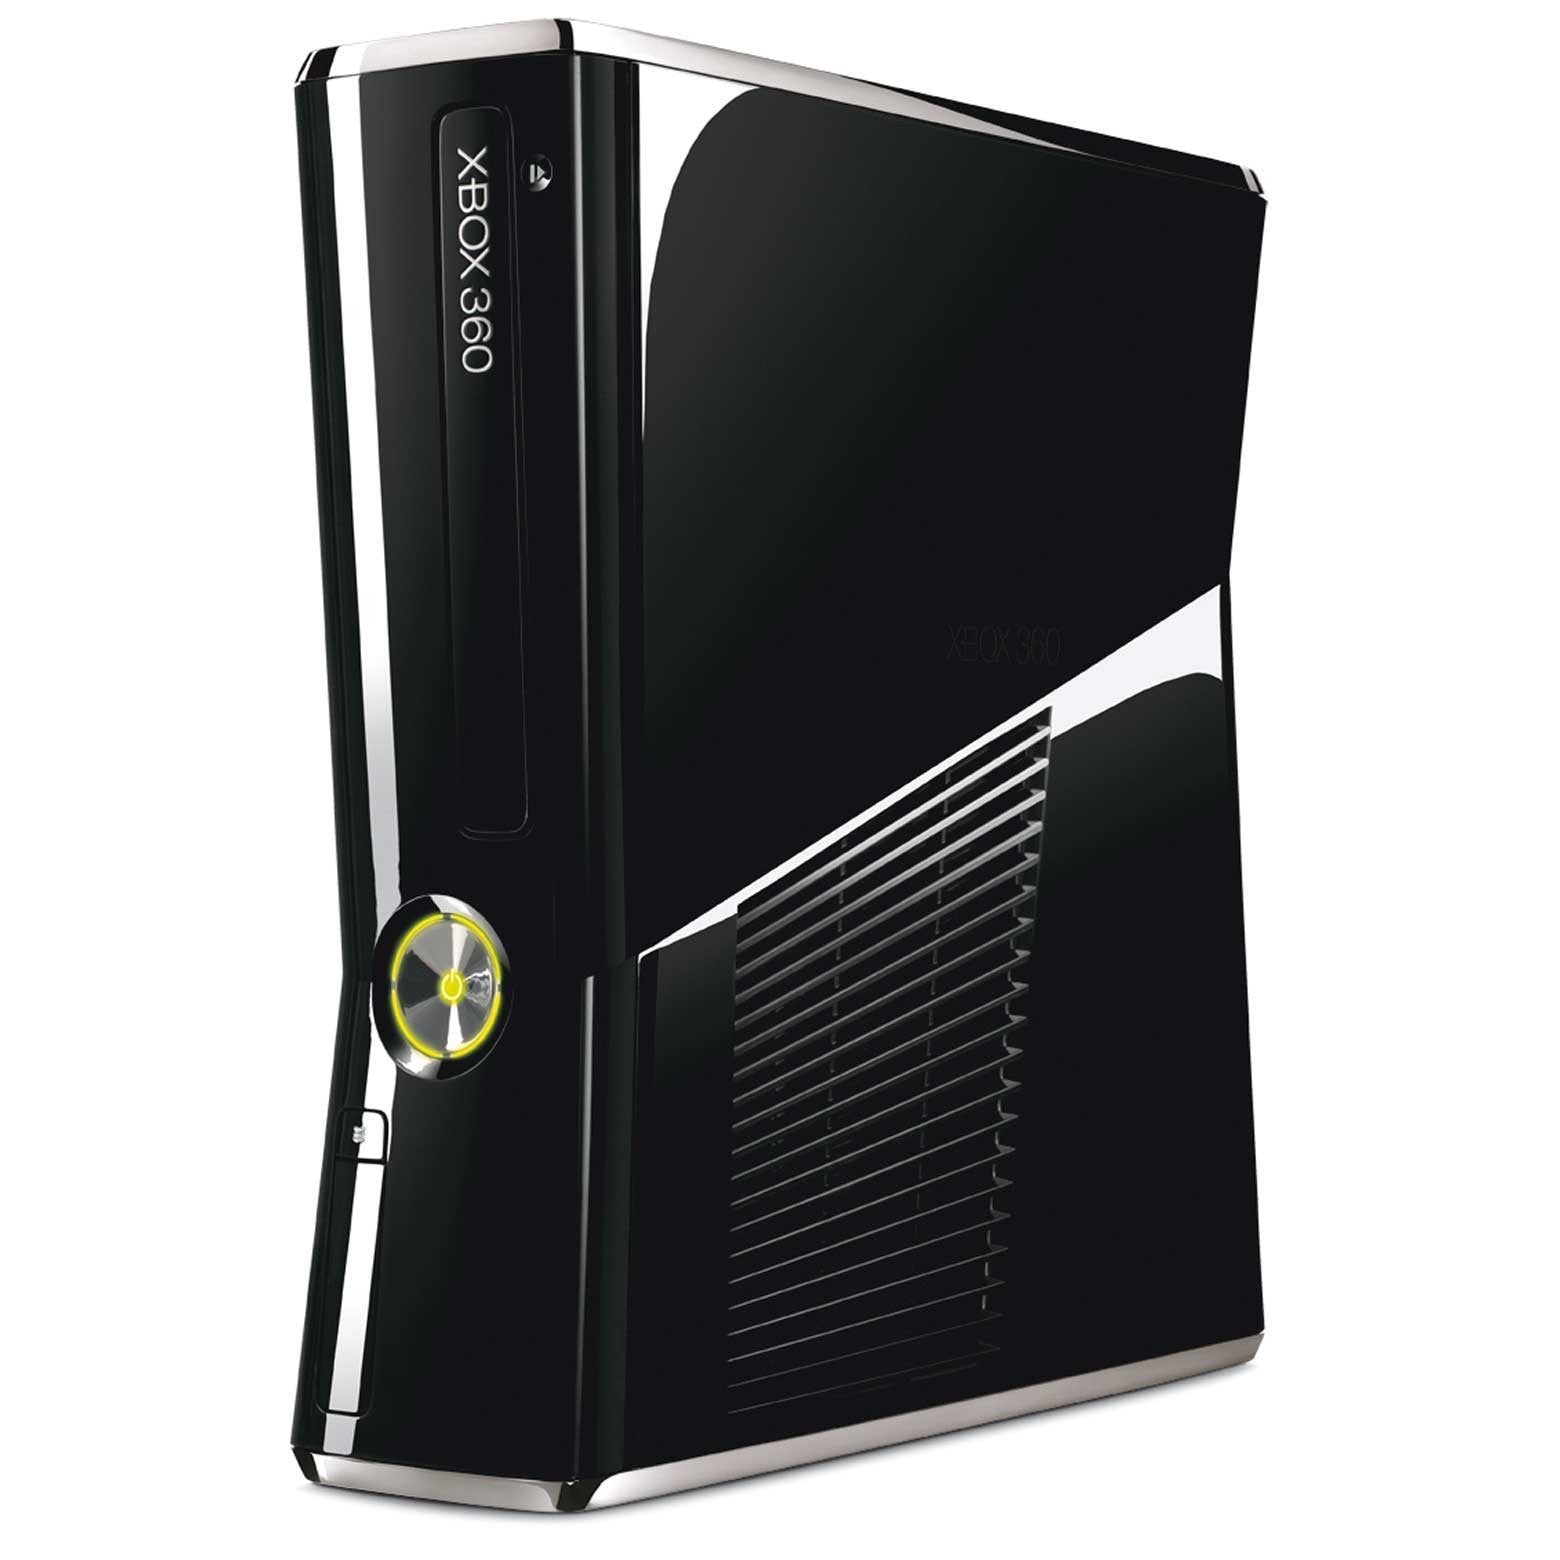 Microsoft Xbox 360 Slim S Black Console Bundle